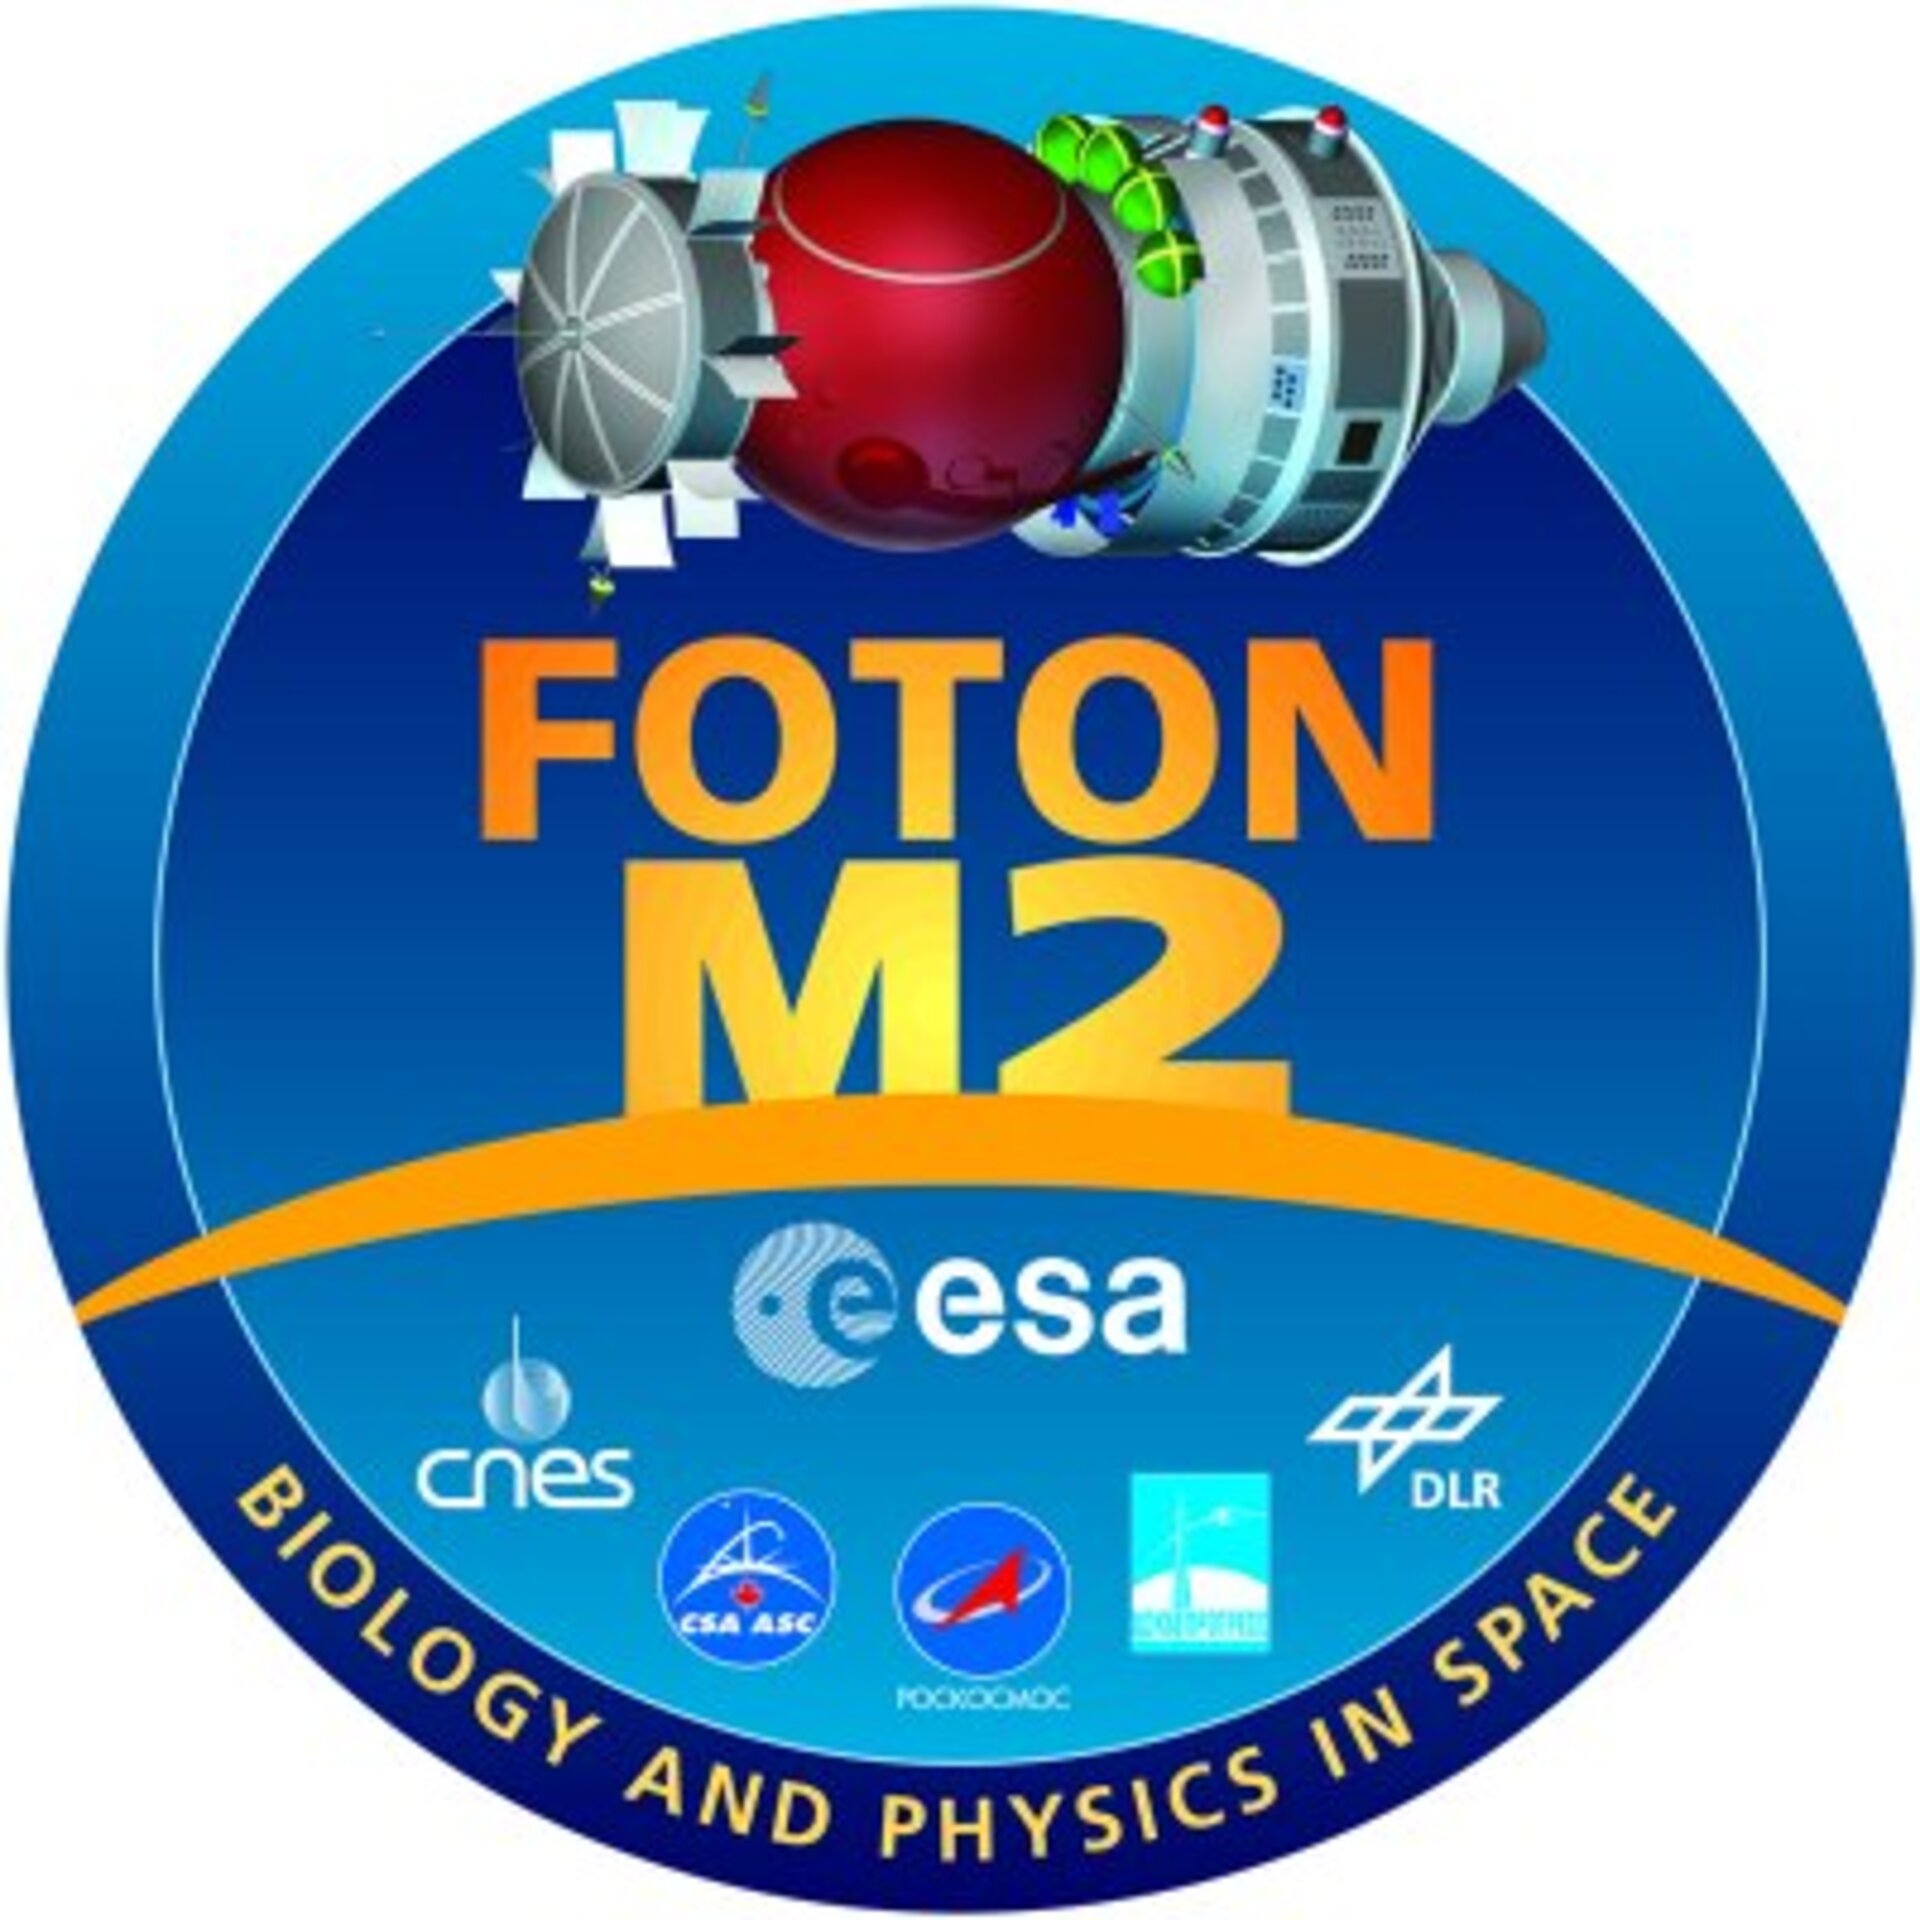 Foton-M2 mission logo